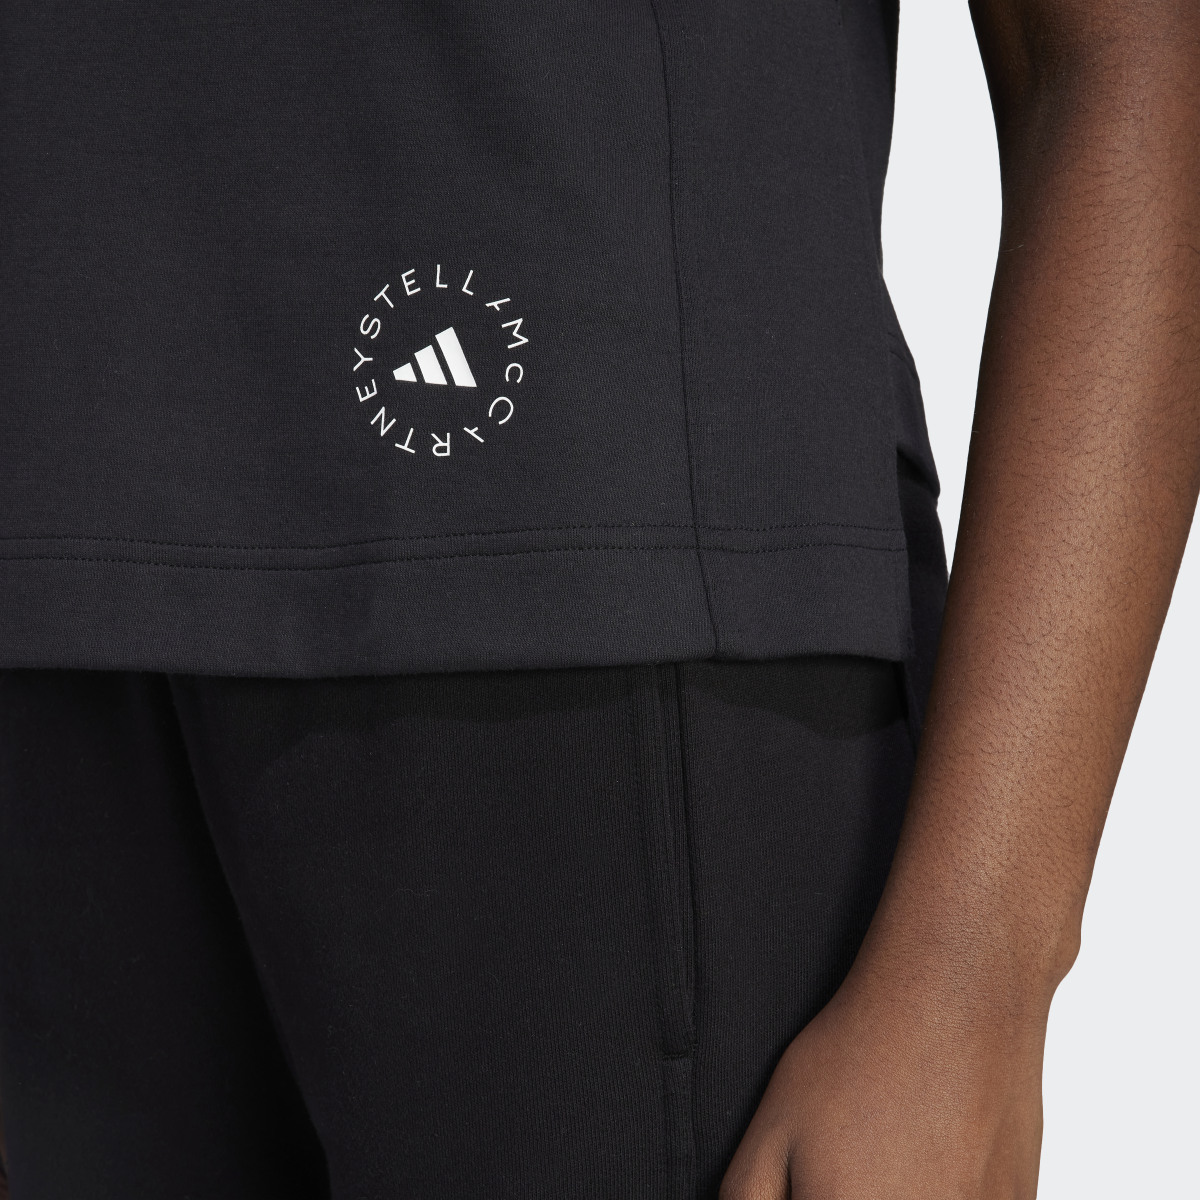 Adidas by Stella McCartney Logo Tank Top. 6